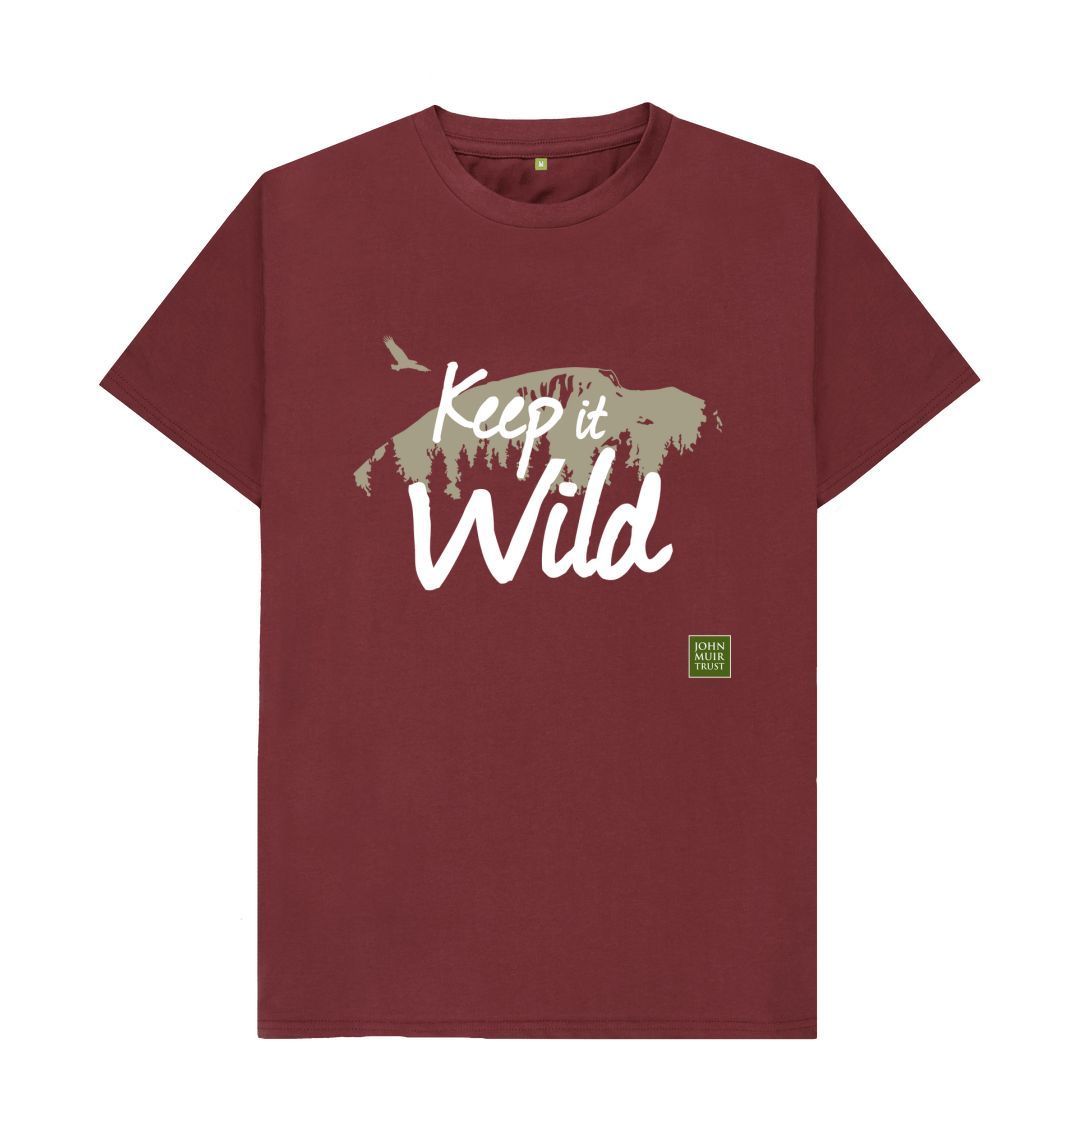 Red Wine Ben Nevis T-shirt - Keep it Wild Men's